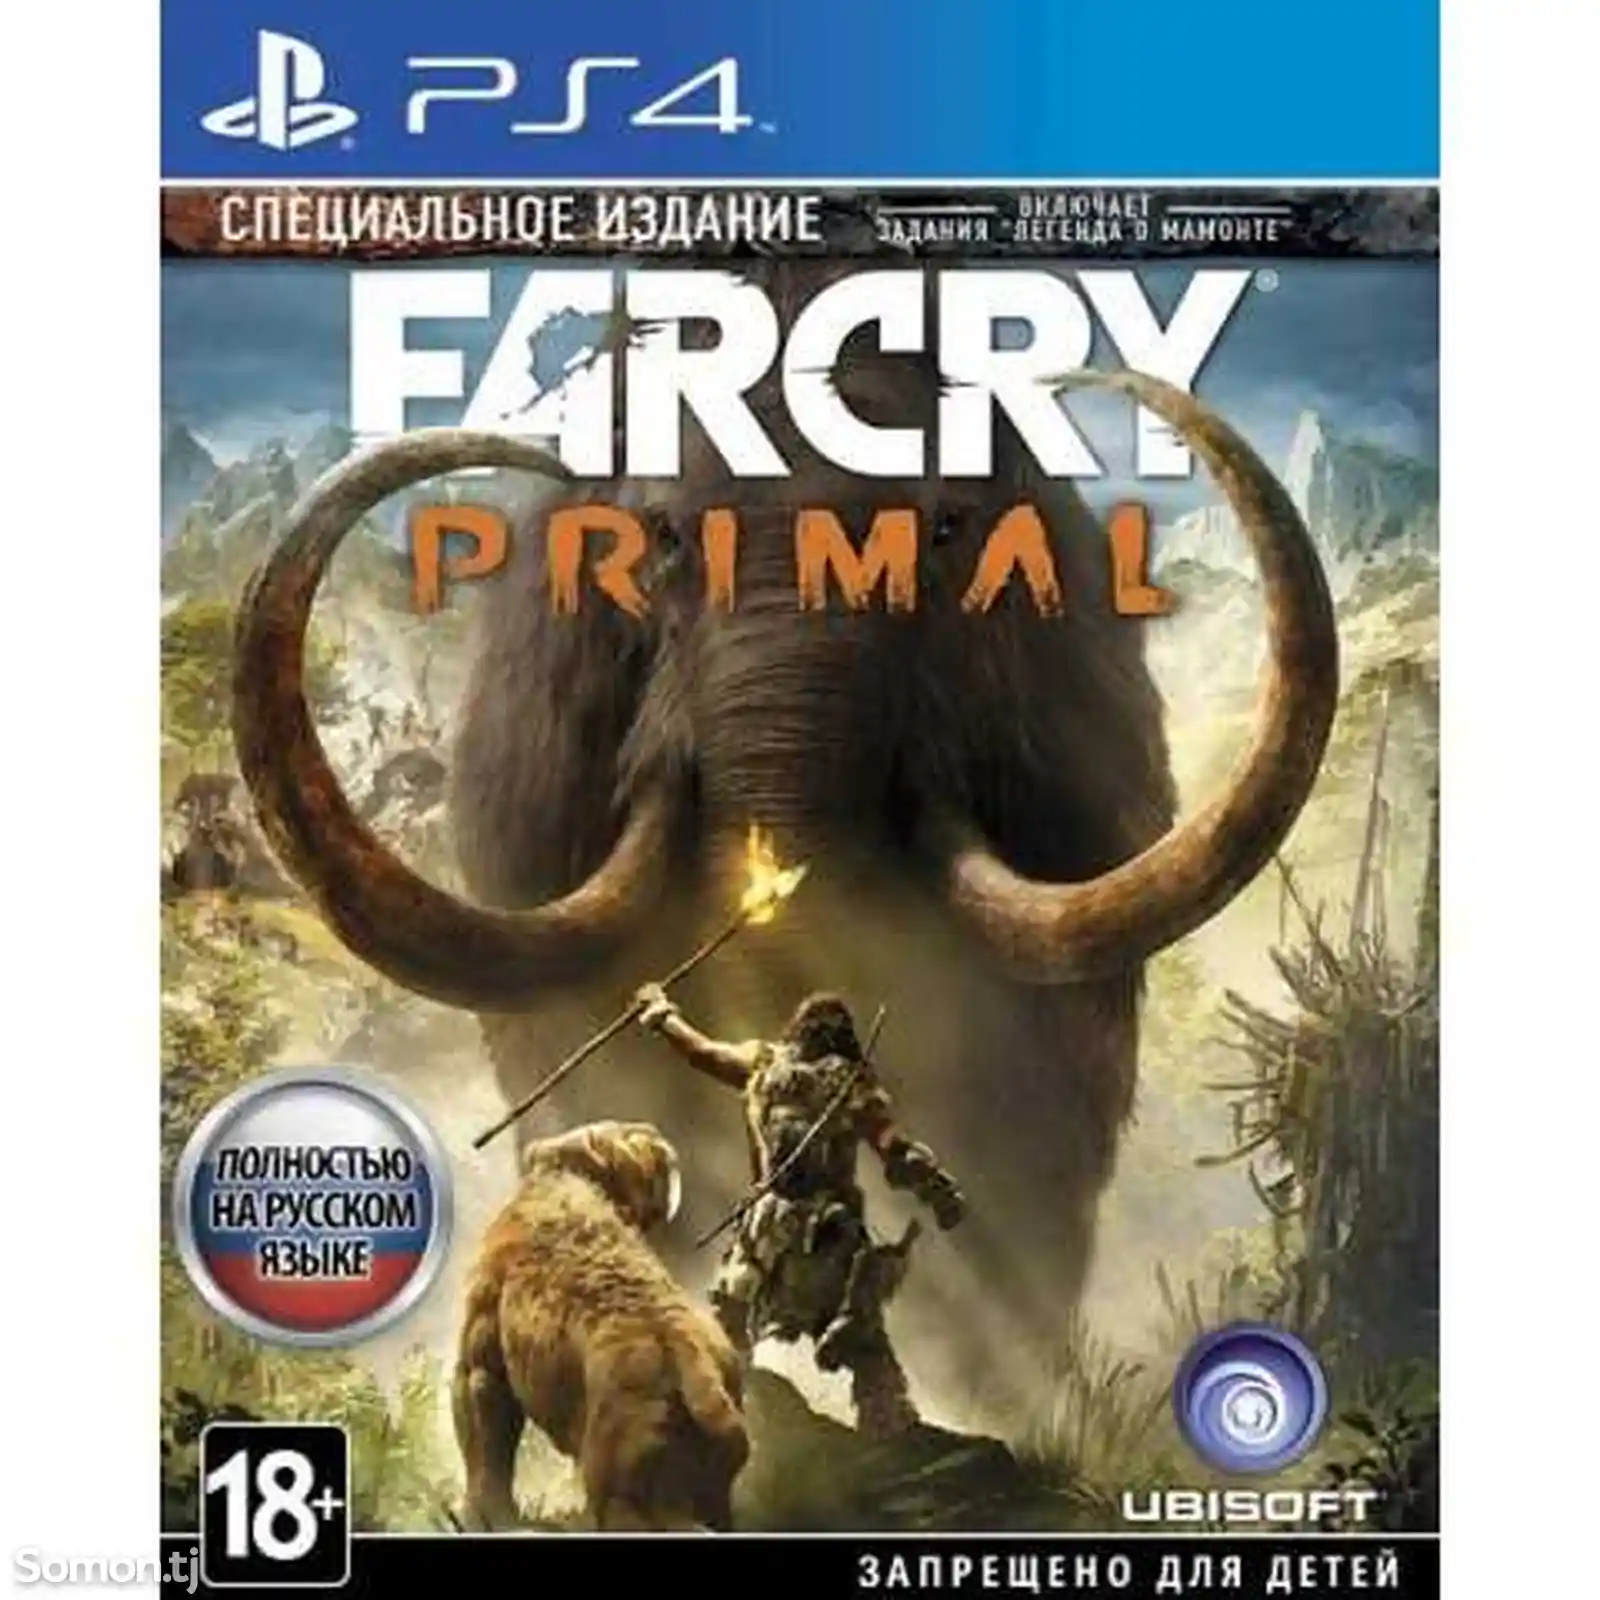 Видеоигра Farcry Primal для Sony PlayStation 4-1